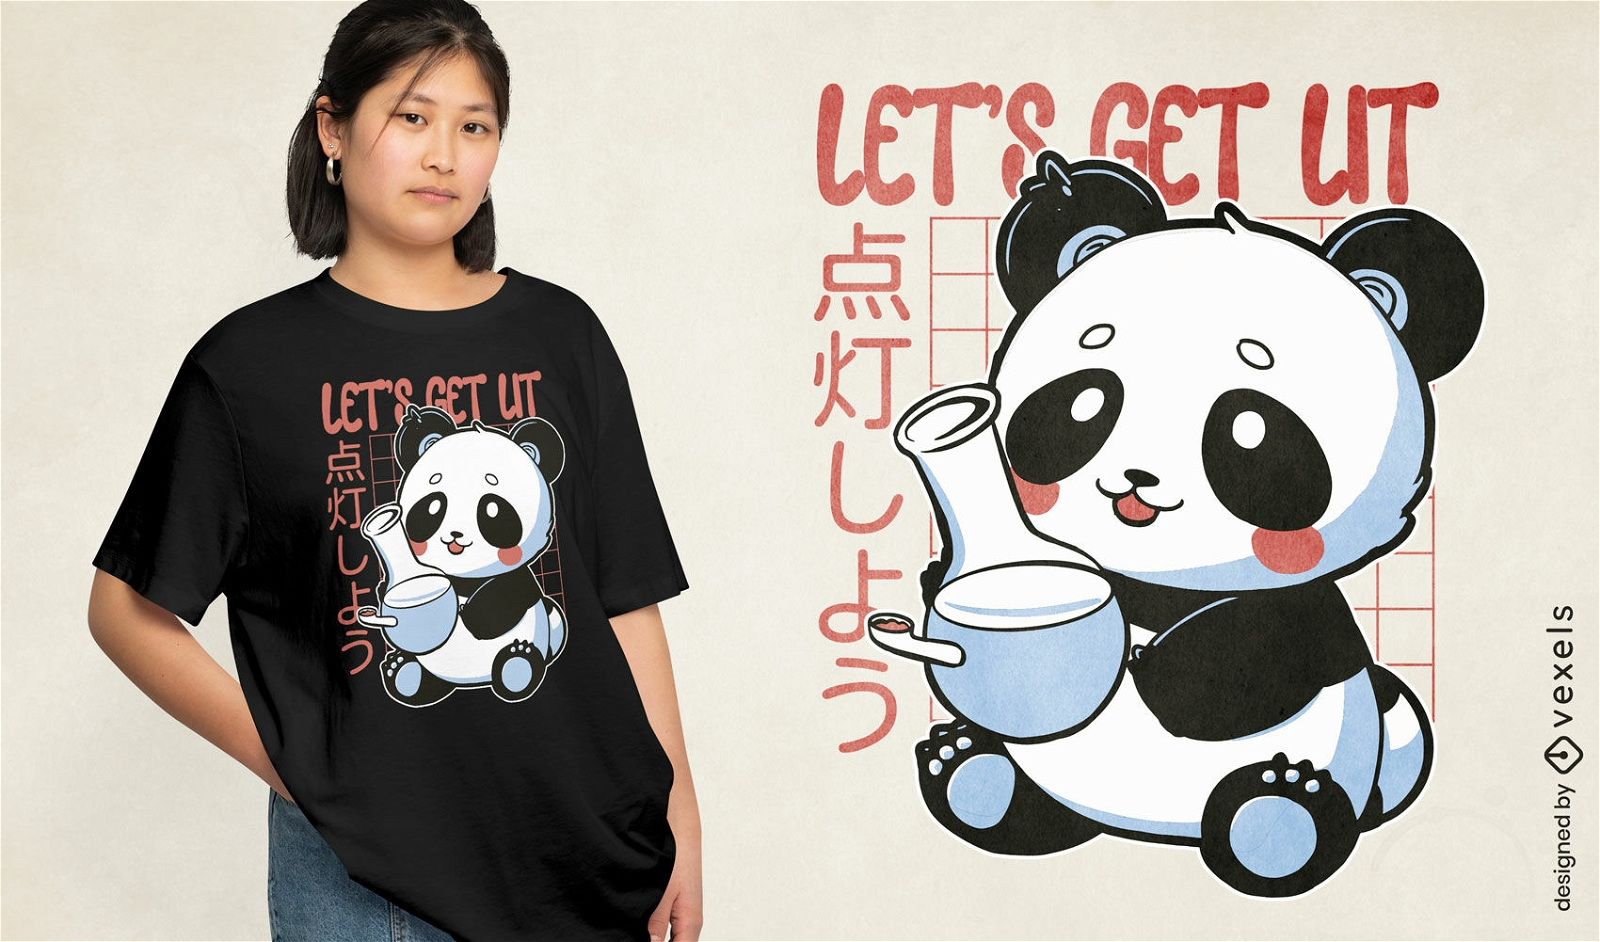 Panda bear PNG Designs for T Shirt & Merch